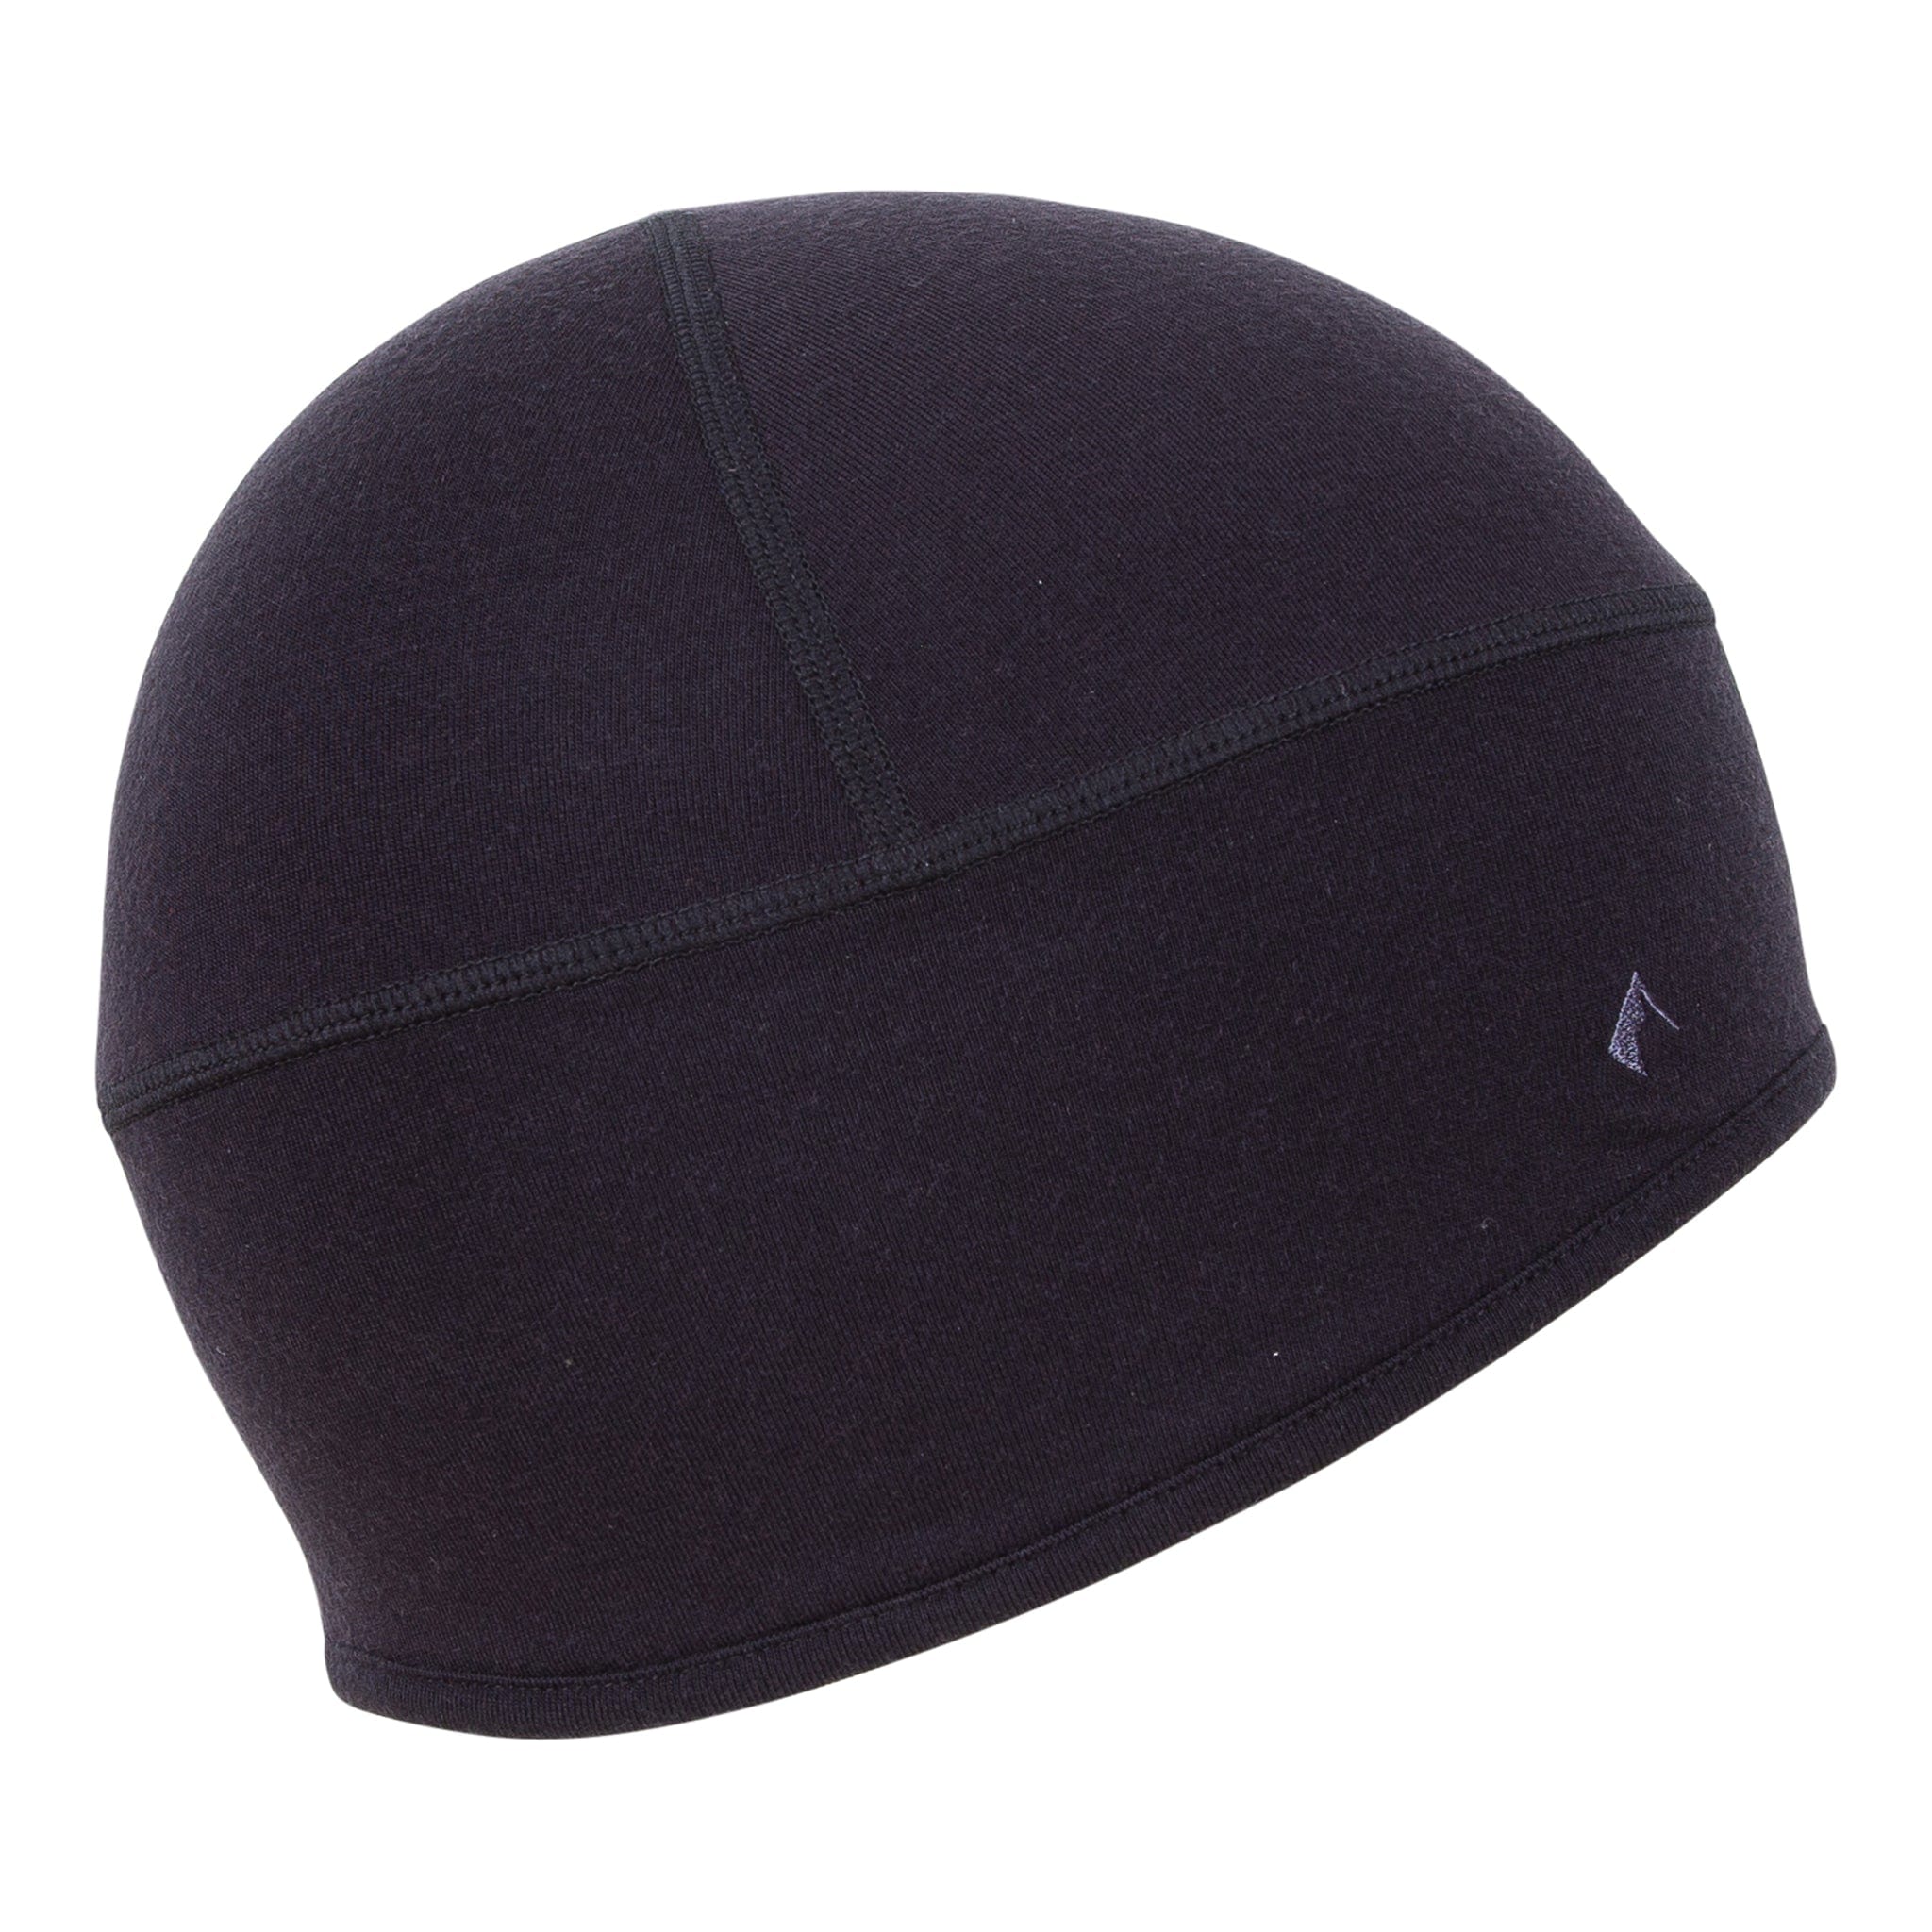 hehiy Winter hat Made of Merino Wool - Cap Made in Italy - Seaman's Cap for  Women/Men Fall/Winter Wool hat Wool Beanie Hat Men Beanie Hat Mens Winter  Fishing Hats for Men 